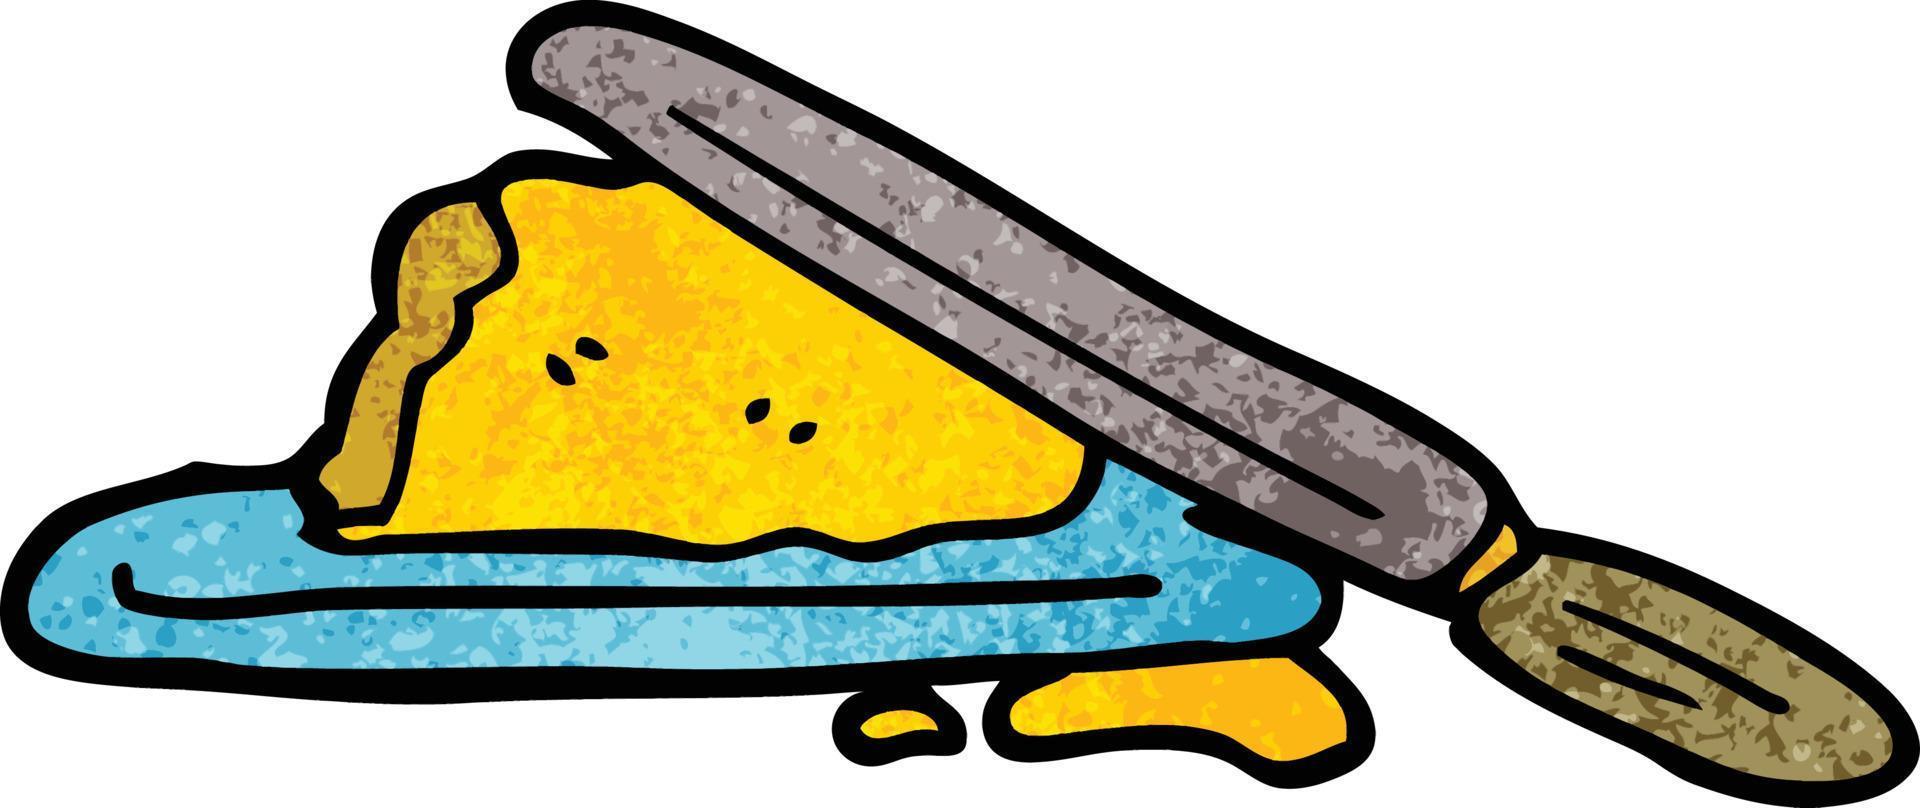 manteiga e faca do doodle dos desenhos animados vetor